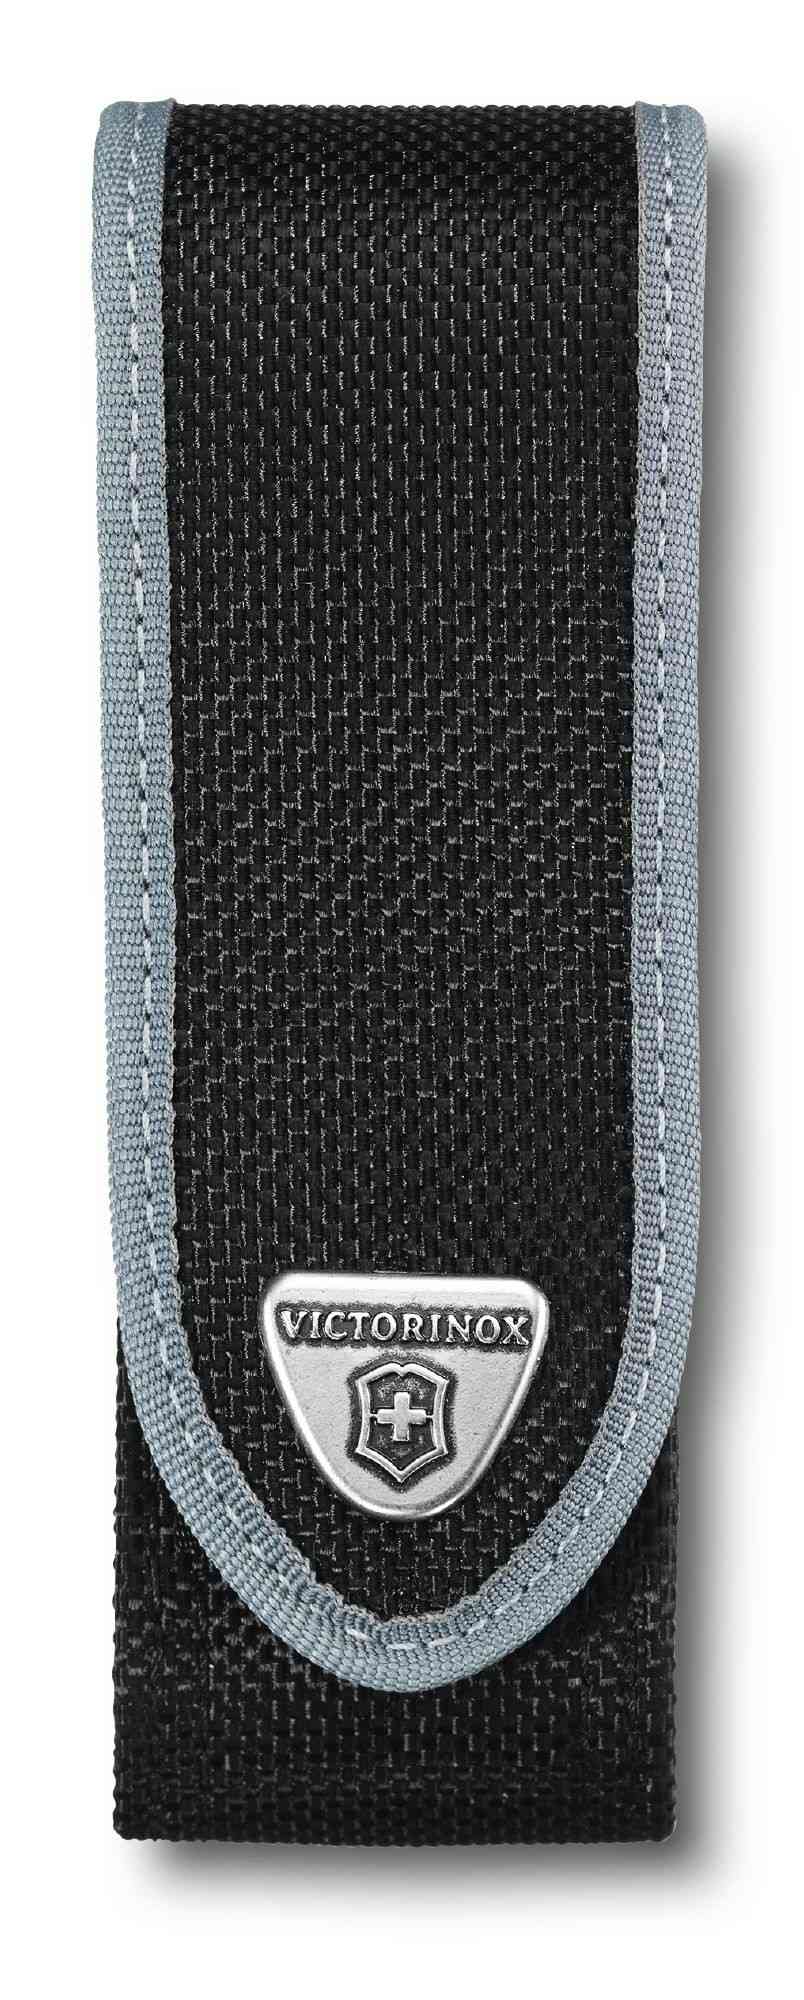 Victorinox 40823N1 Etui nylon avec clip ceinture pivotant - 